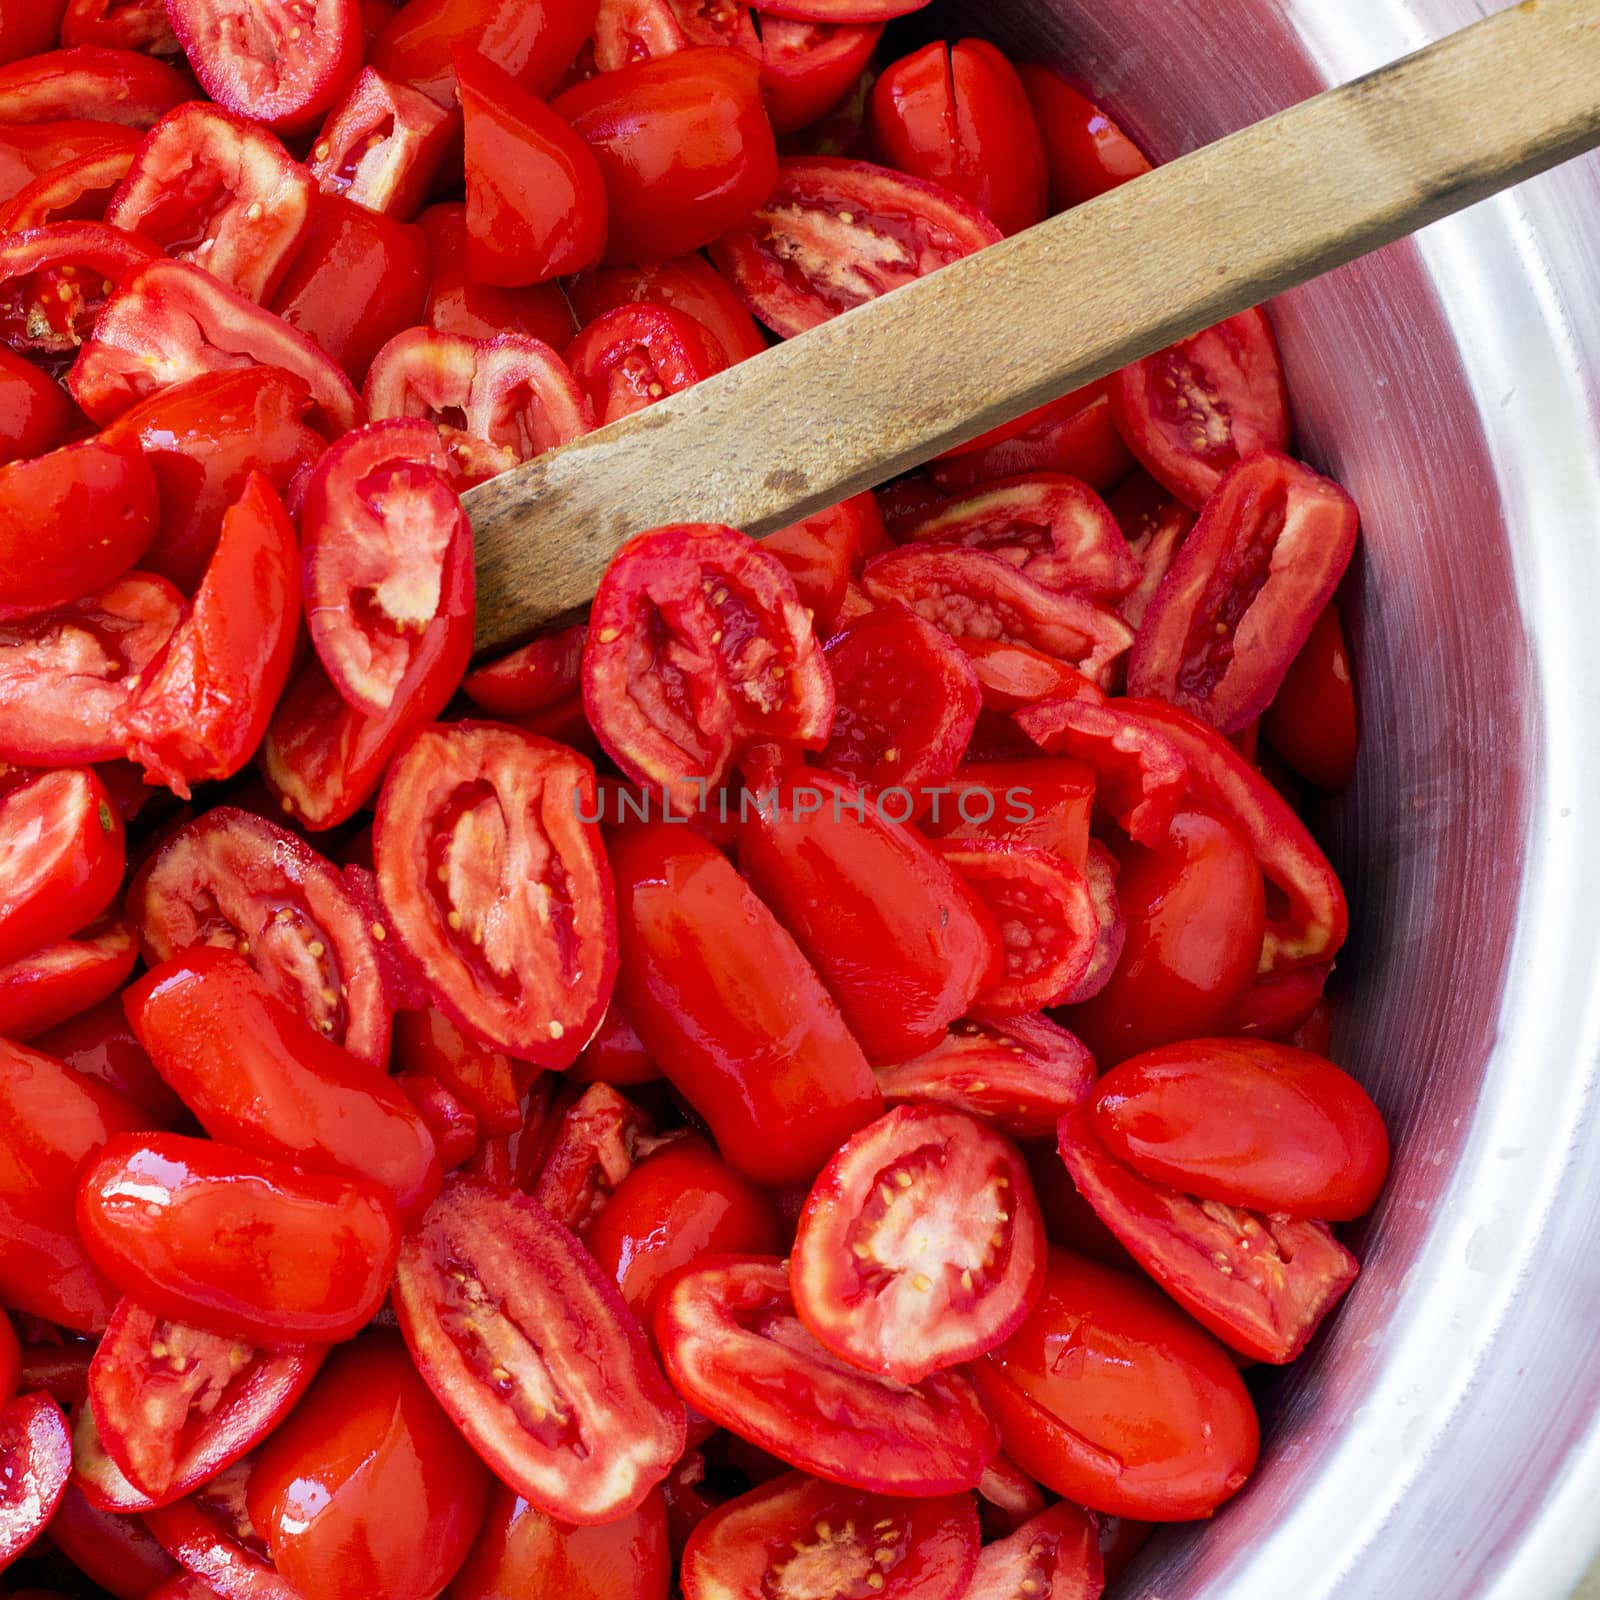 make the tomato sauce at home